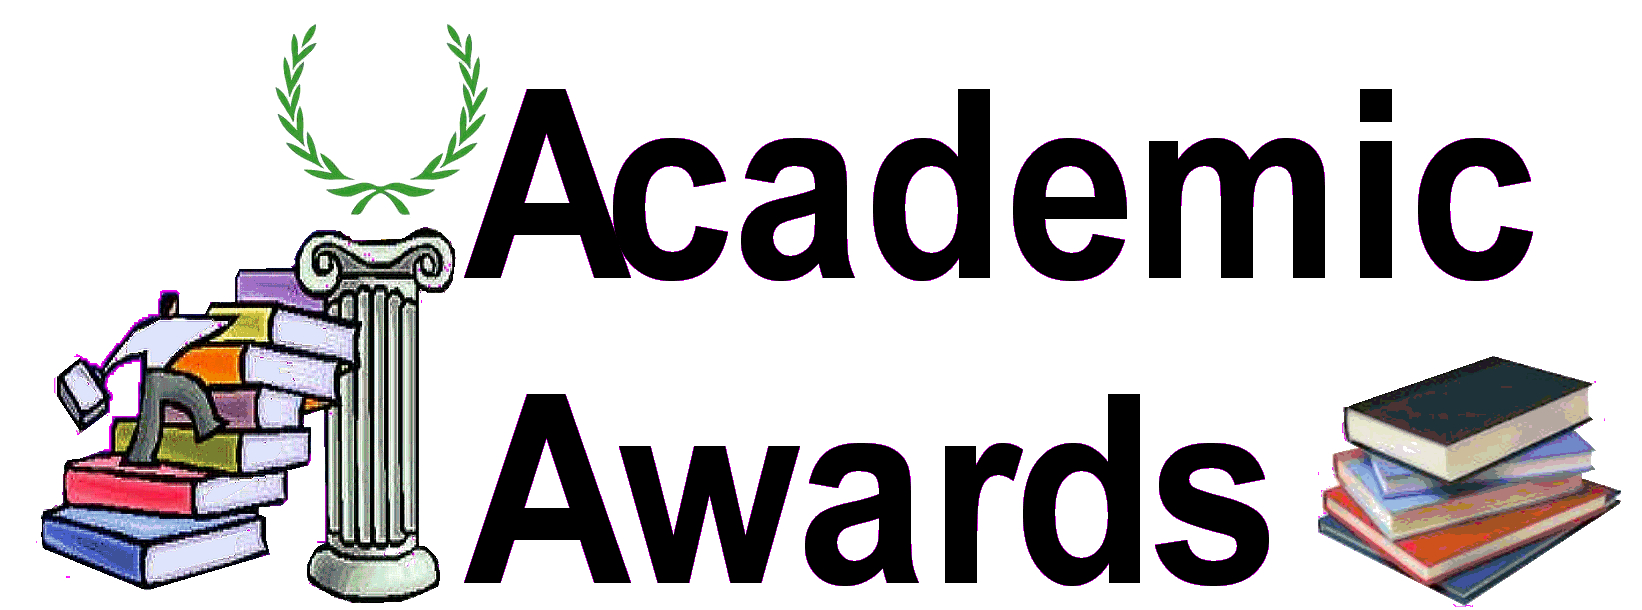 Free Academic Achievement Cliparts, Download Free Academic Achievement ... Elementary School Assembly Clipart